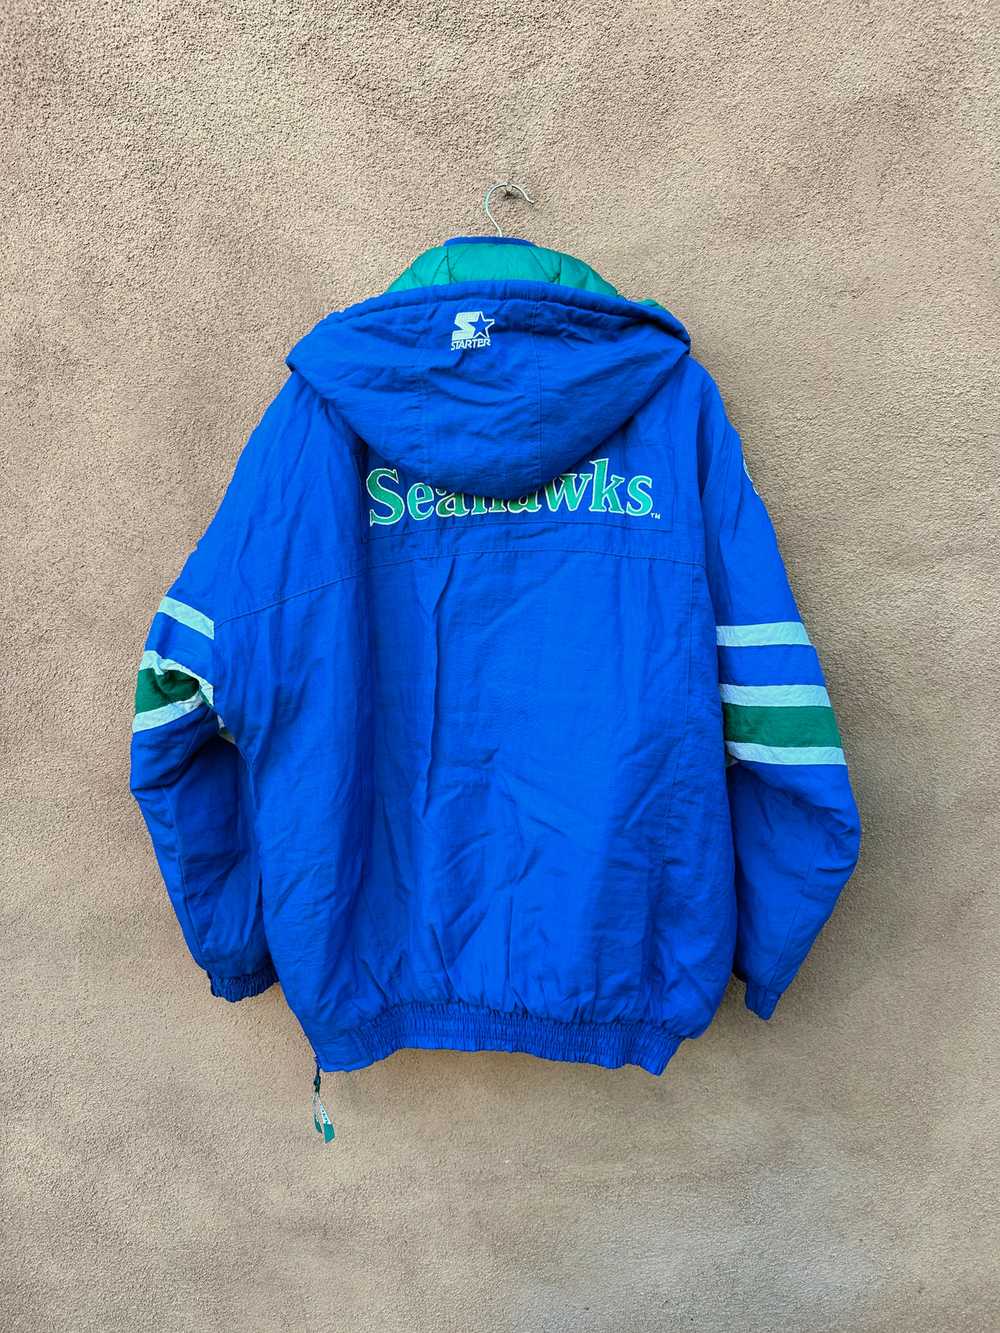 Seattle Seahawks Pro Line Jacket - image 2